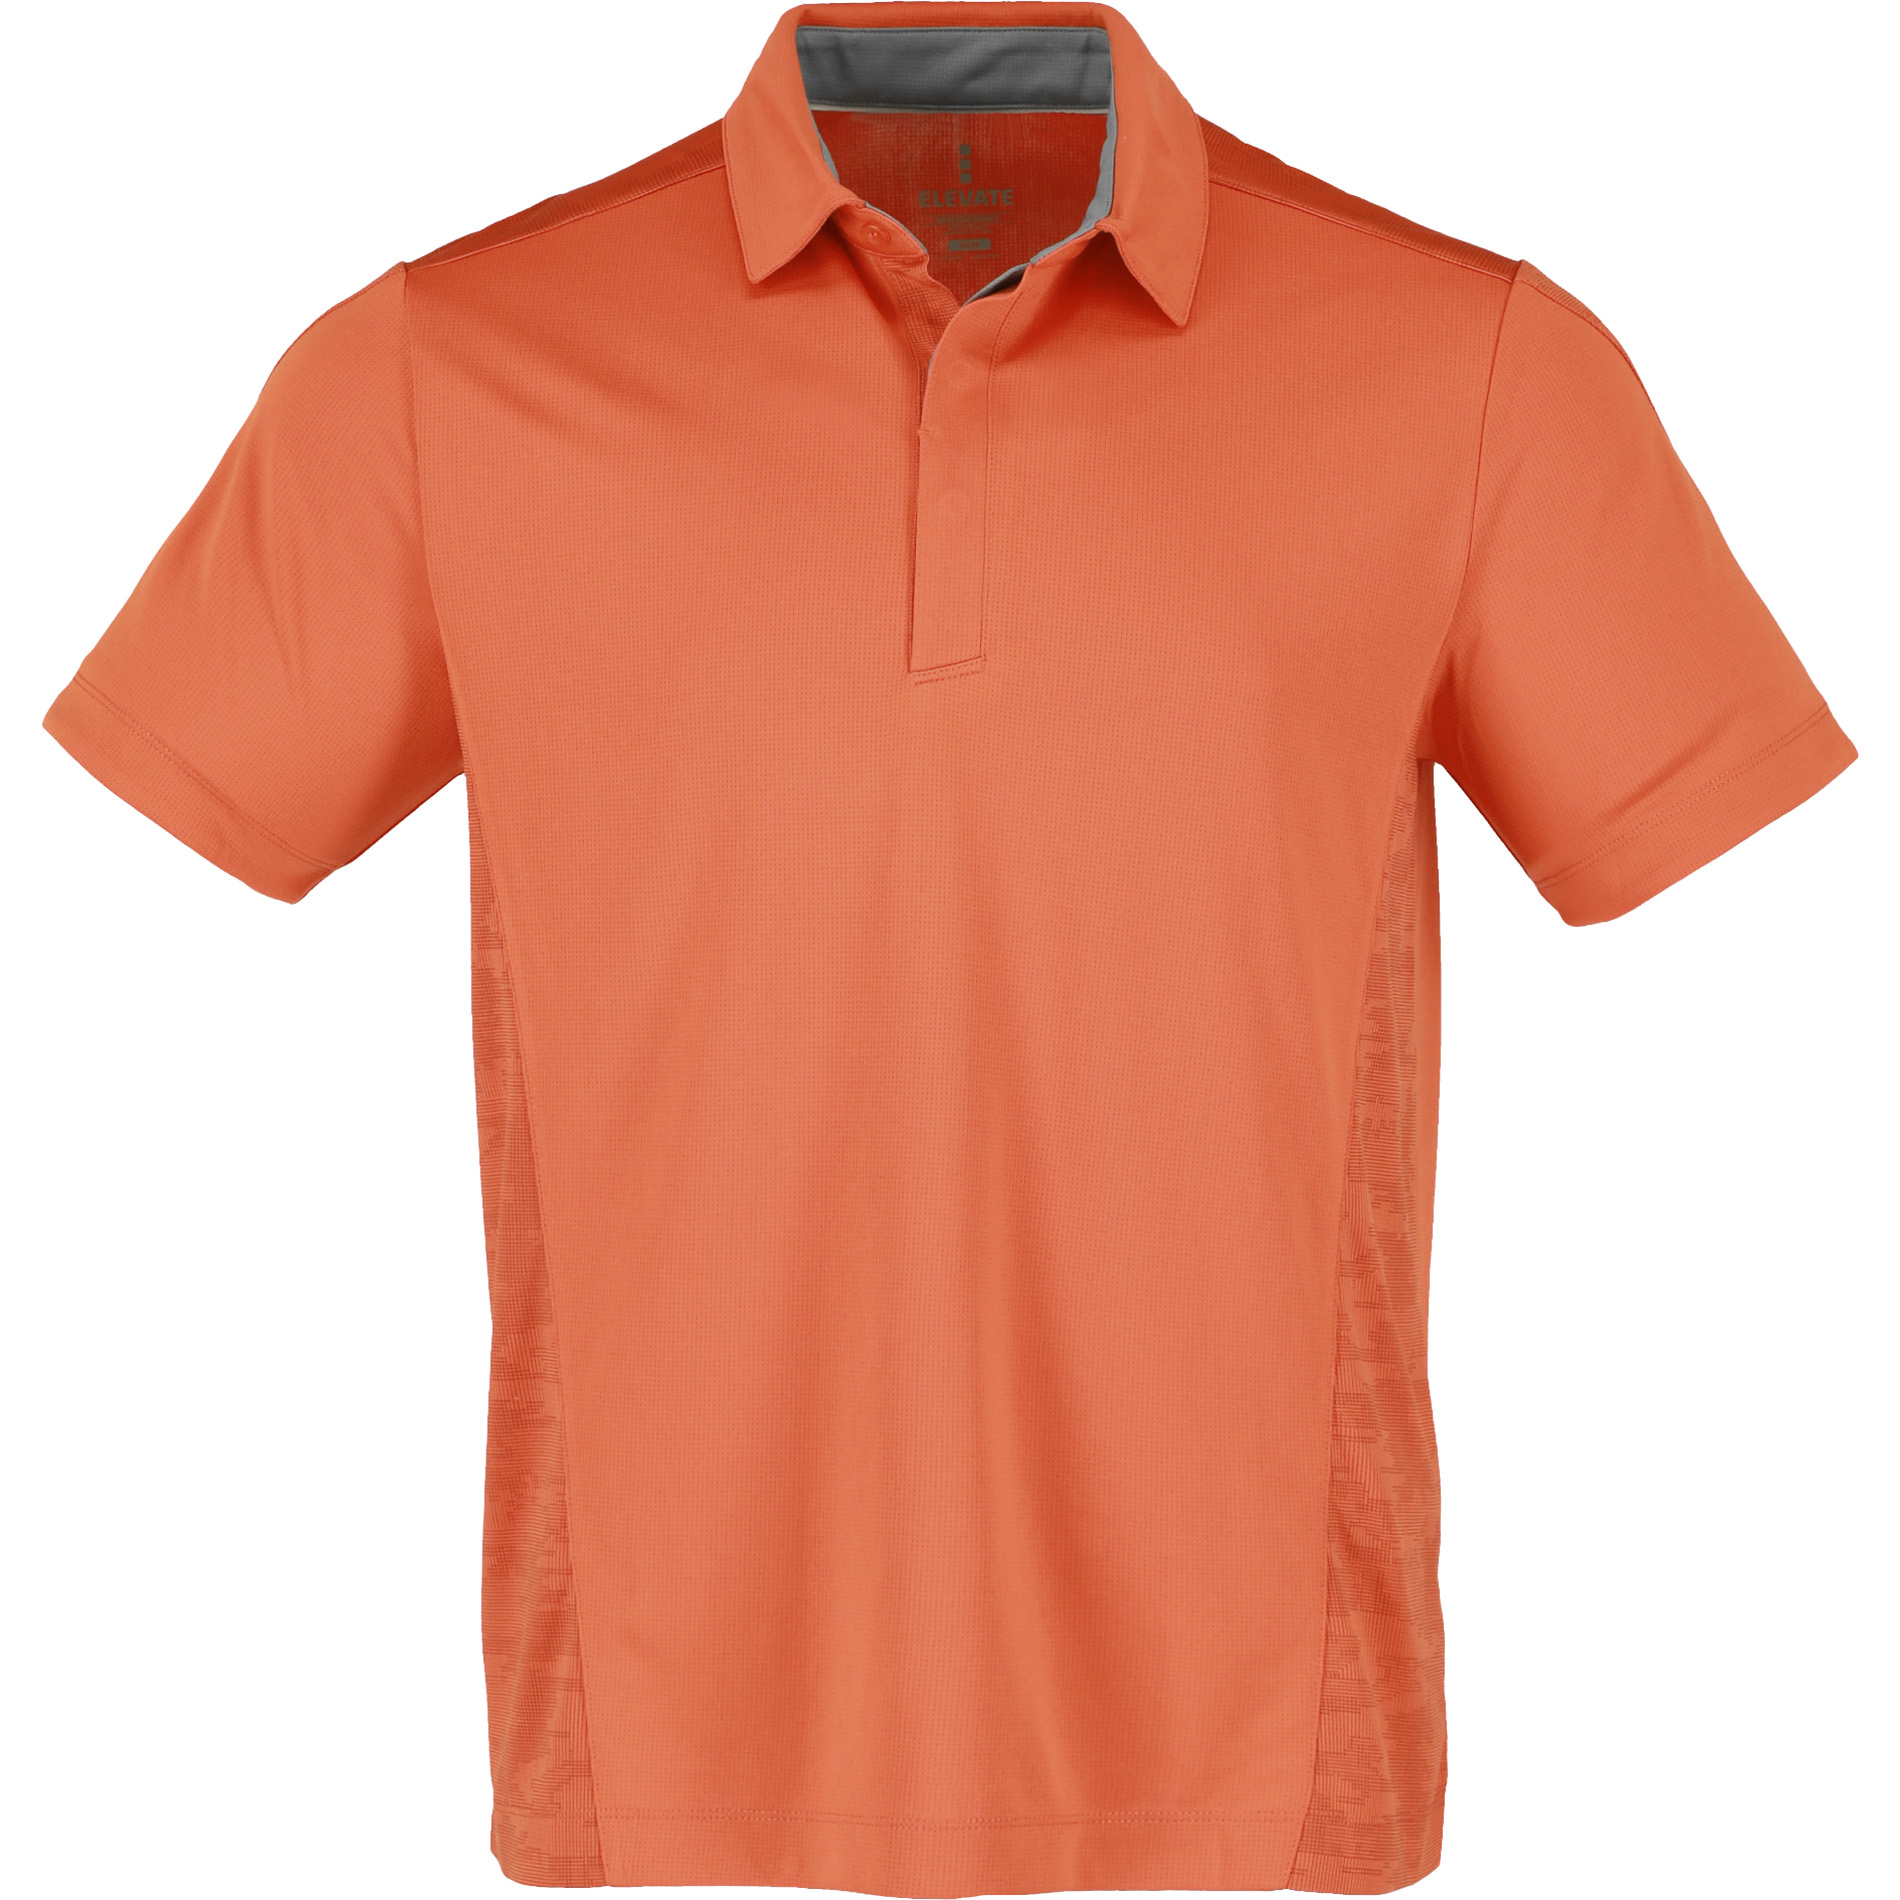 Trimark TM16511 - Men's PIEDMONT Short Sleeve Polo